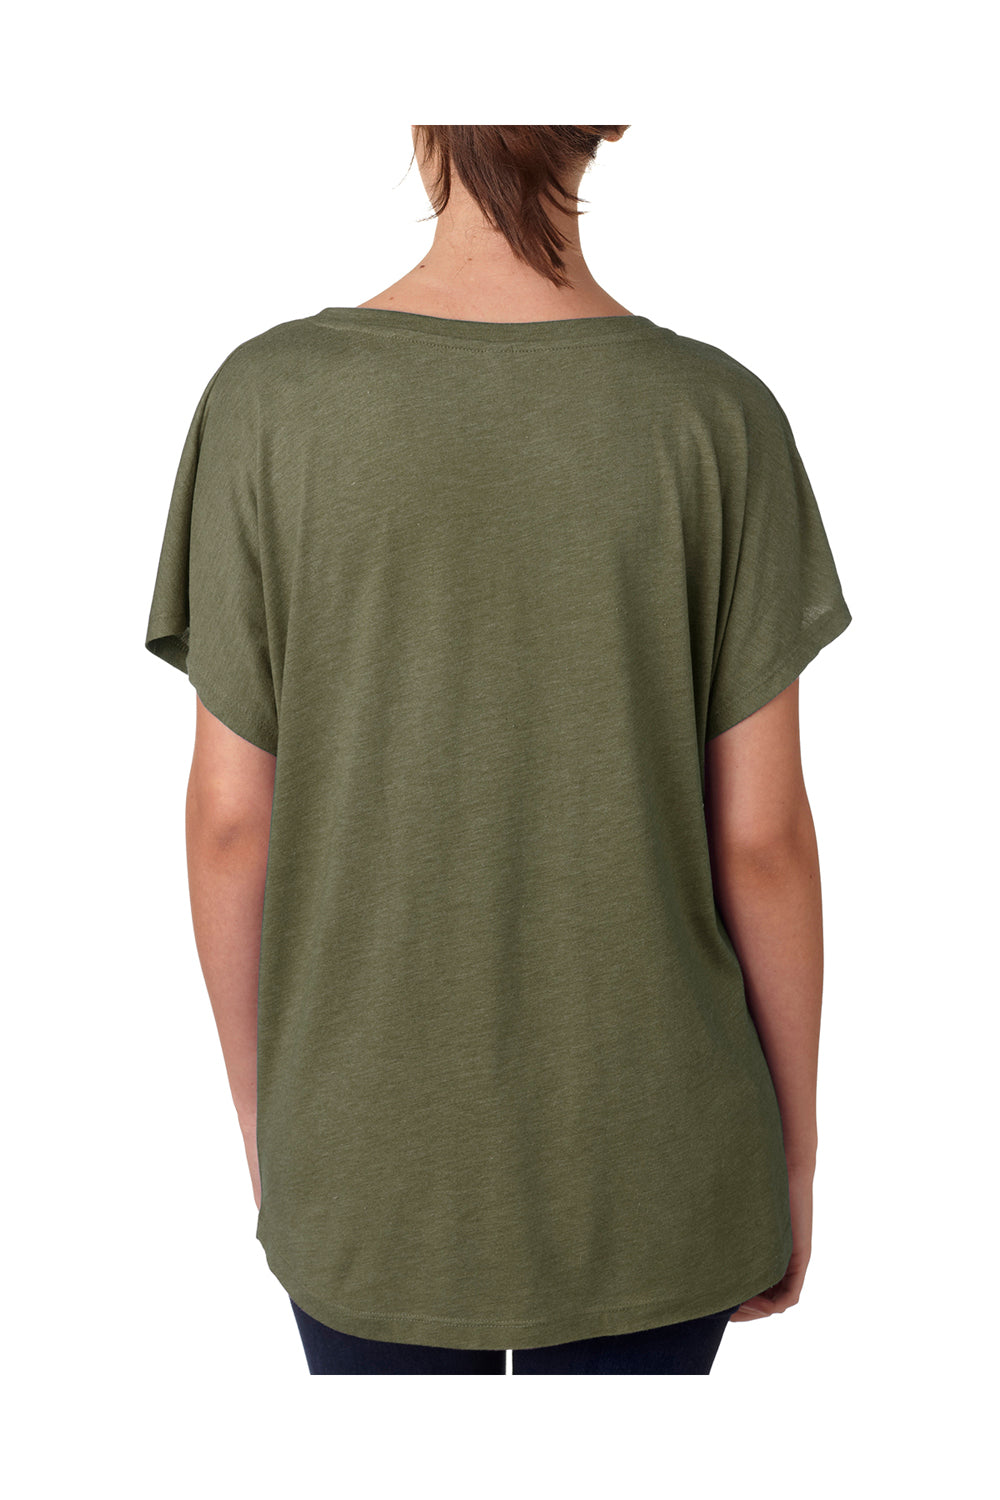 Next Level 6760 Womens Dolman Jersey Short Sleeve Scoop Neck T-Shirt Military Green Back